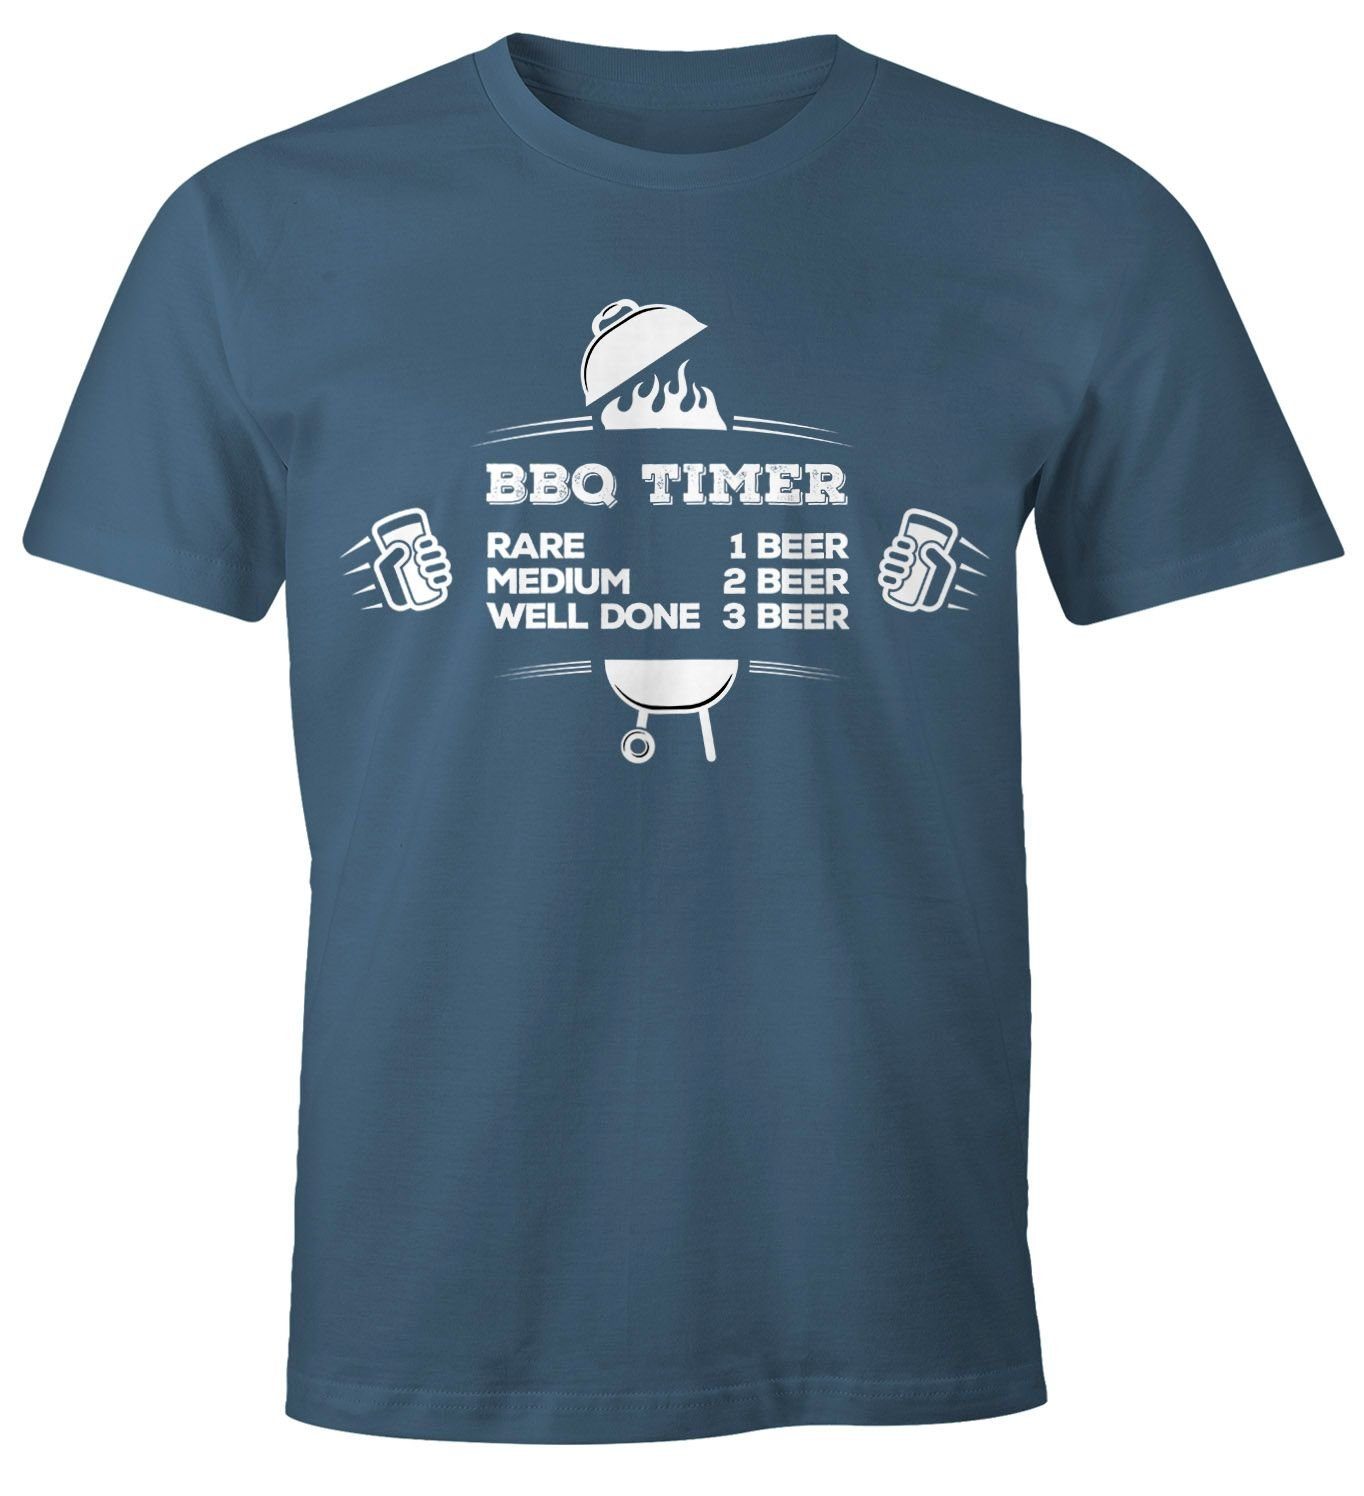 MoonWorks Print-Shirt Herren T-Shirt BBQ Timer Fun-Shirt Grillen Barbecue Tee Sommer Food Moonworks® mit Print blau